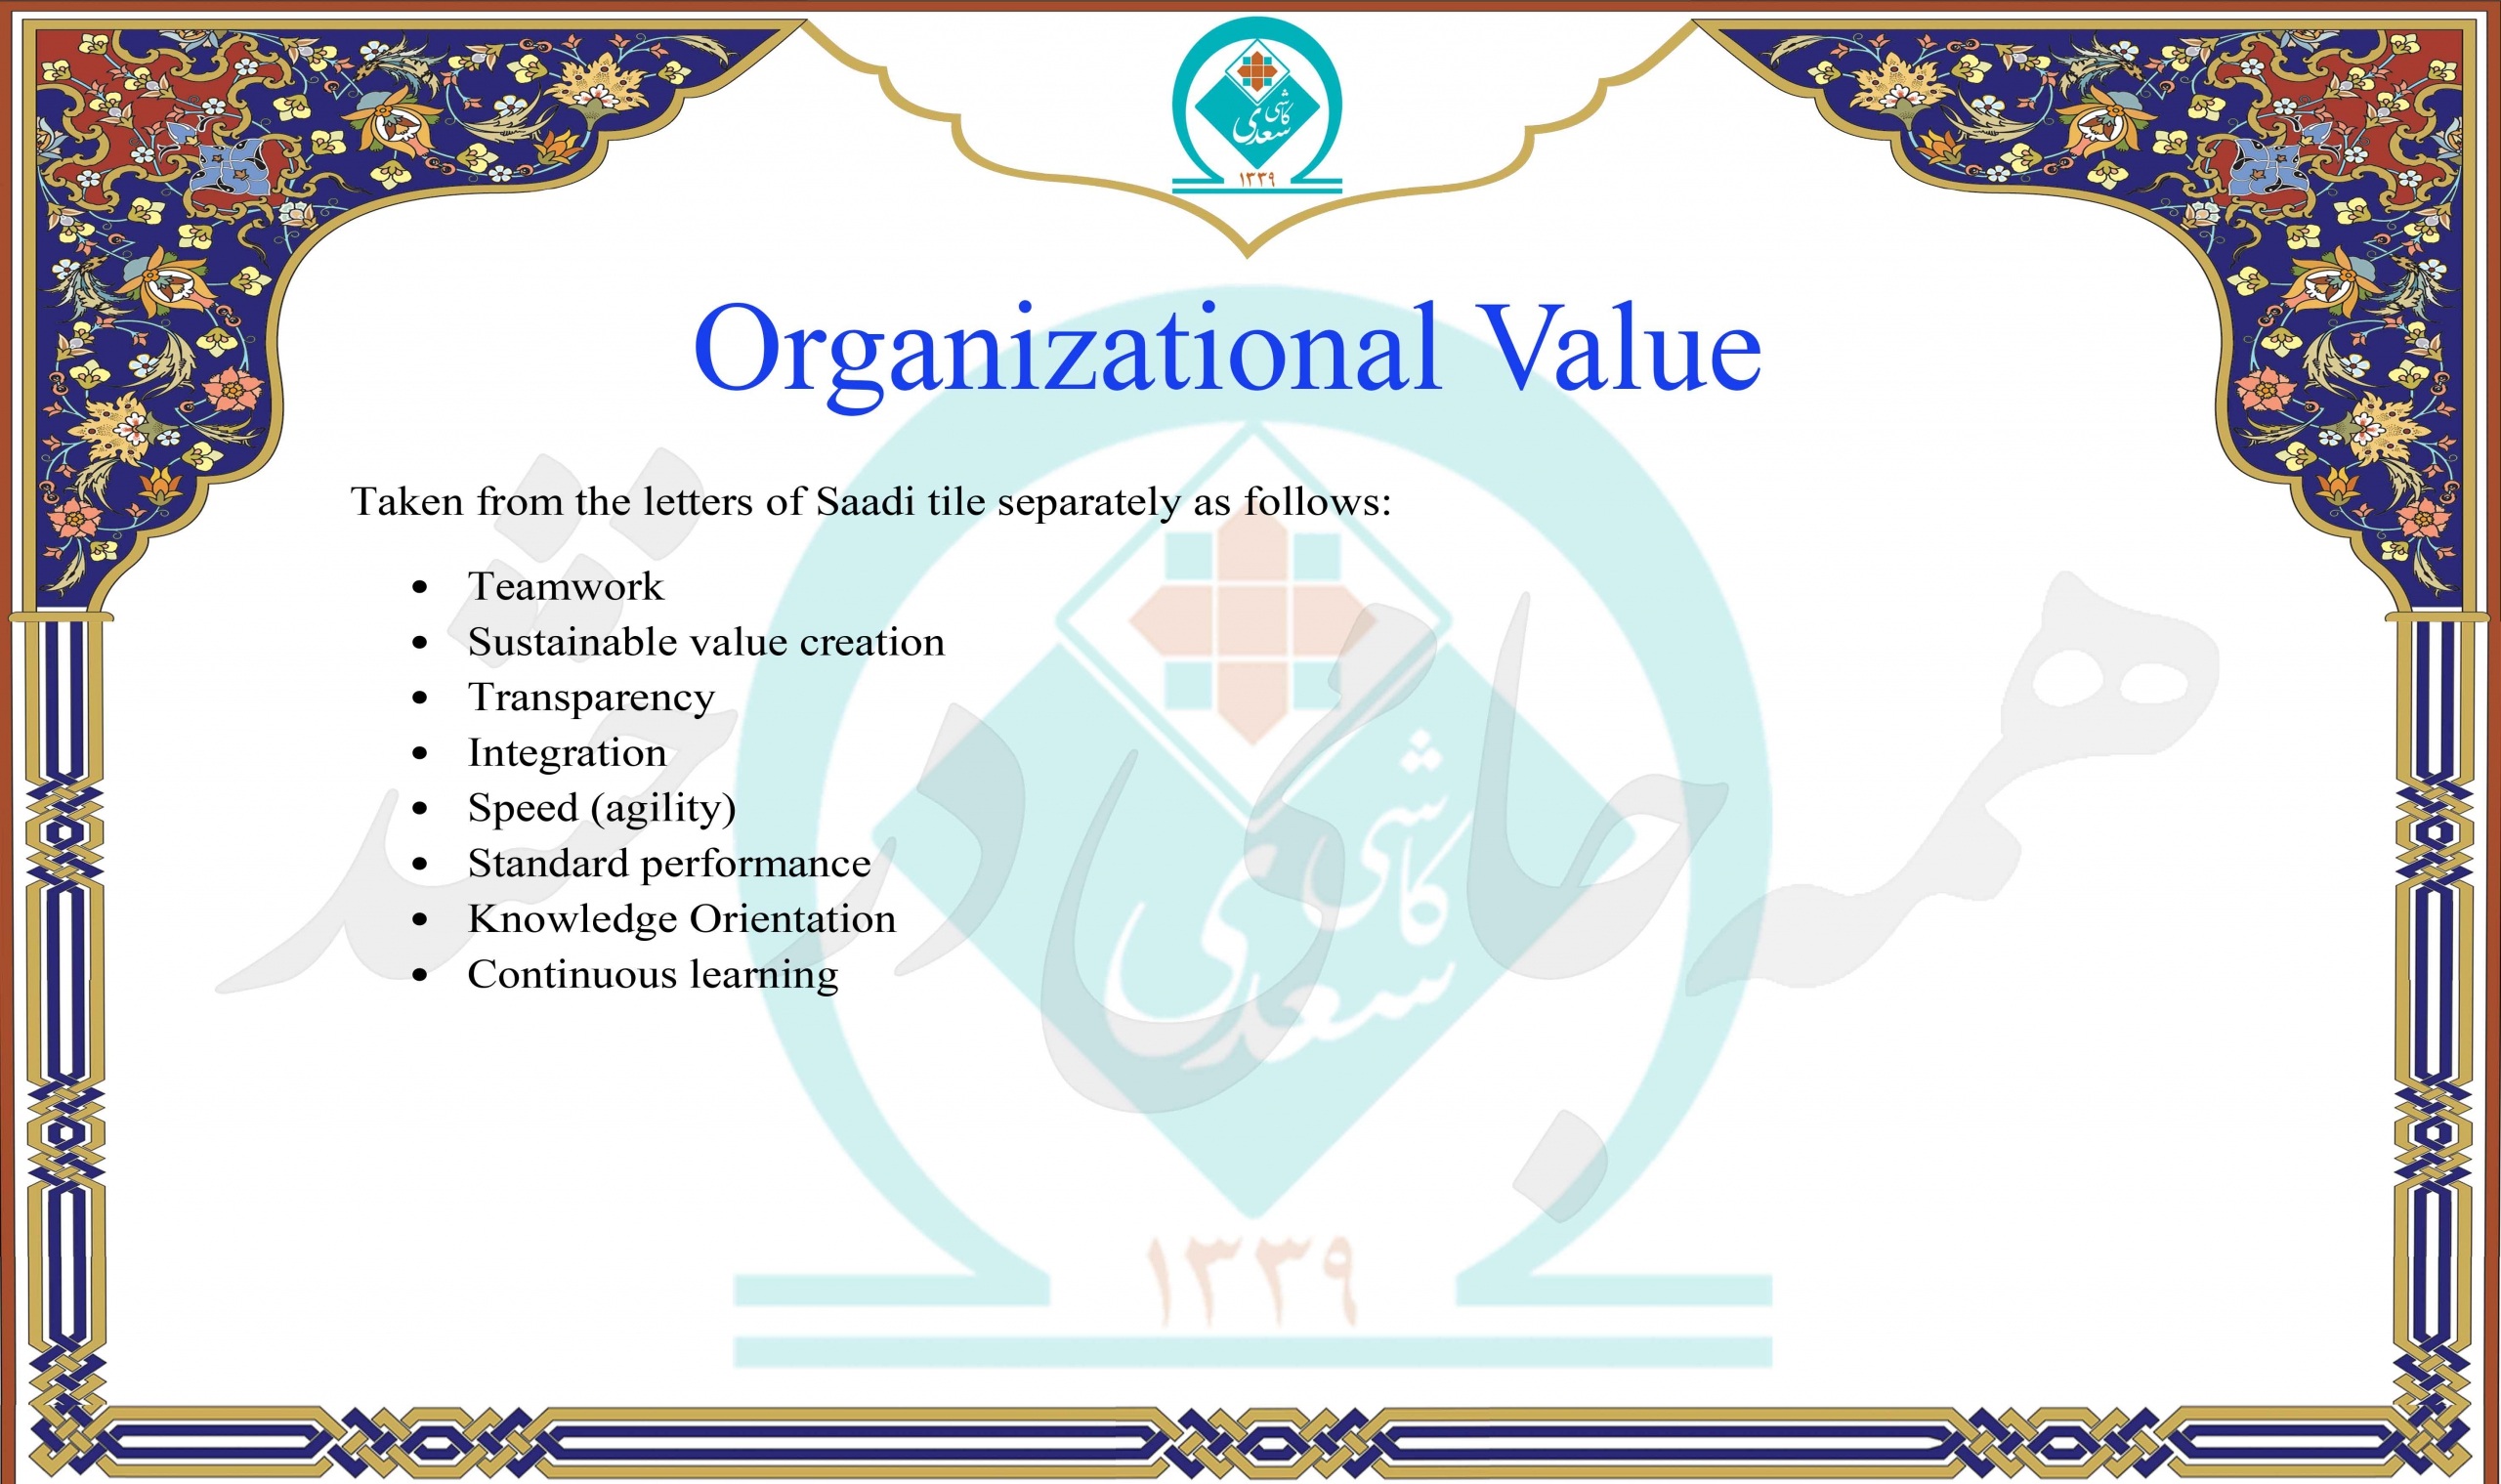 Organizational value